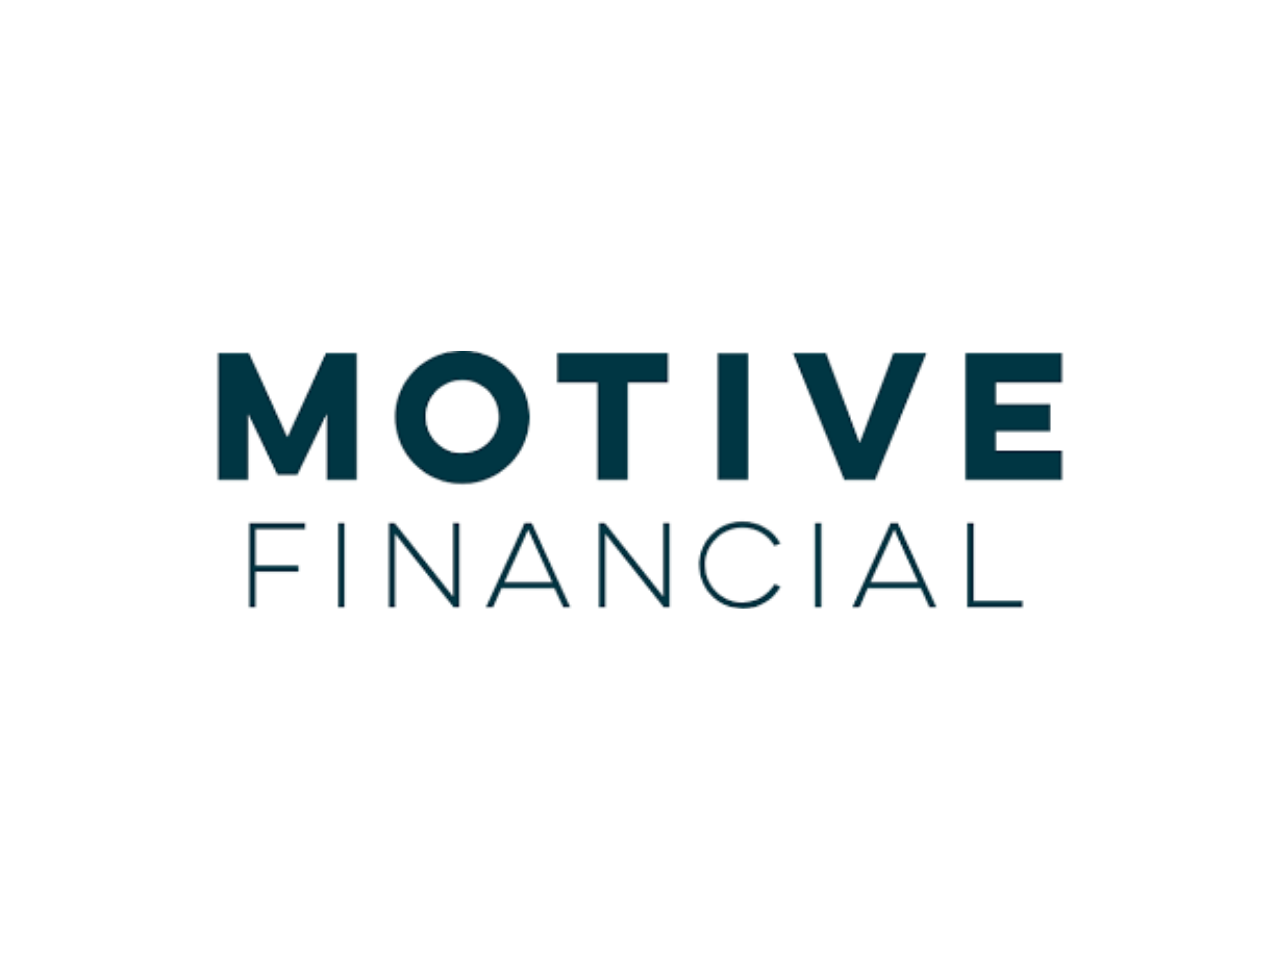 Motive Financial Review